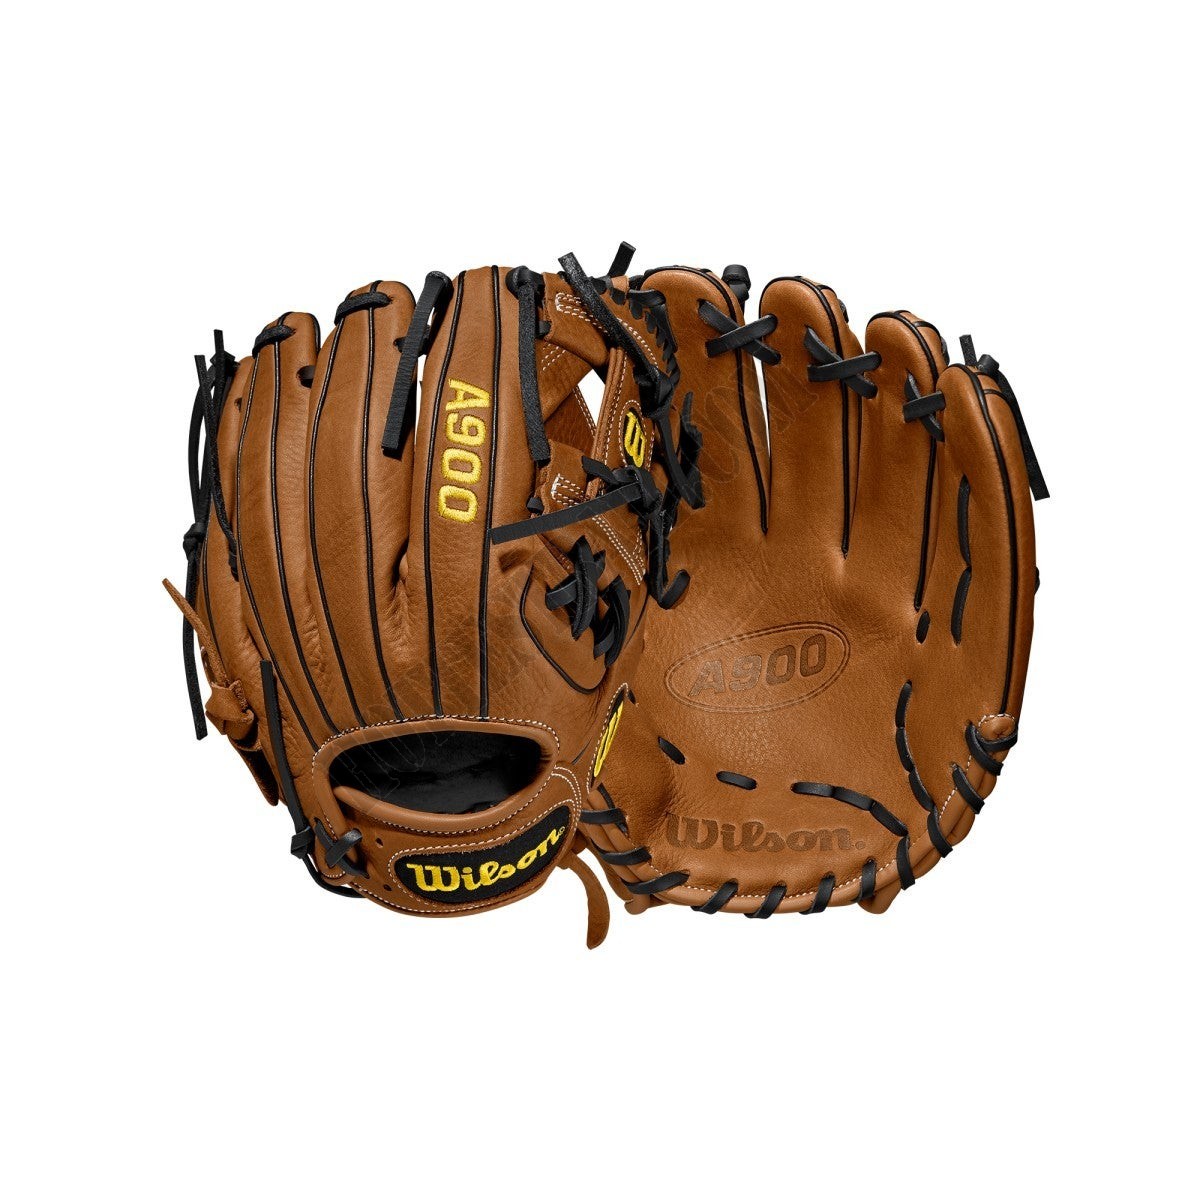 2020 A900 11.5" Baseball Glove ● Wilson Promotions - 2020 A900 11.5" Baseball Glove ● Wilson Promotions